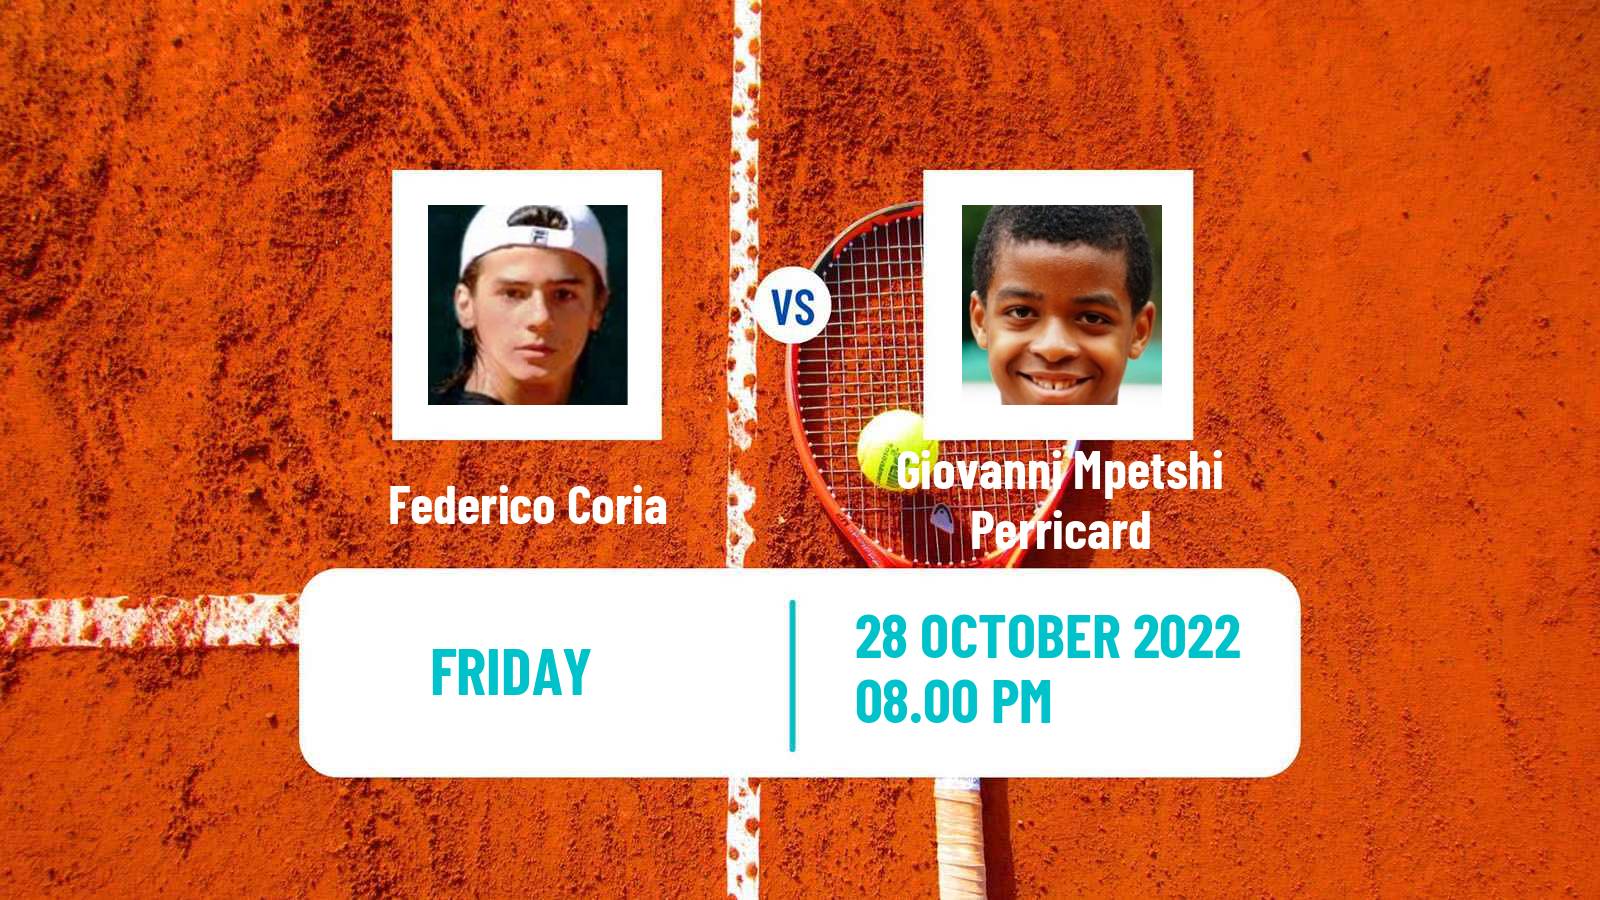 Tennis ATP Challenger Federico Coria - Giovanni Mpetshi Perricard